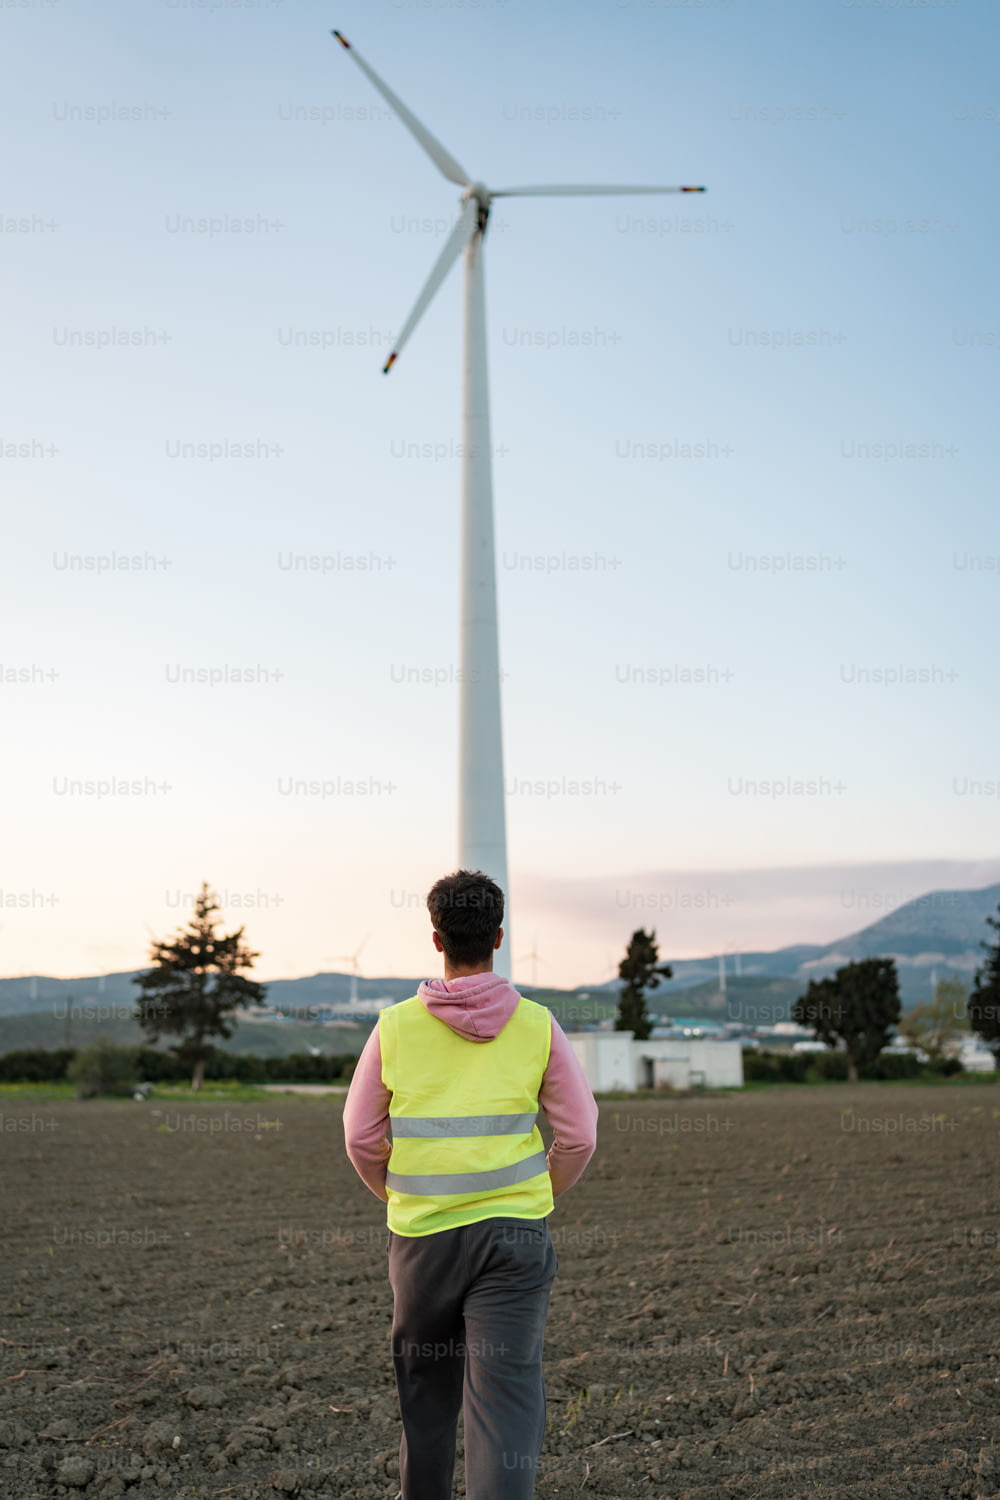 Un hombre con un chaleco amarillo parado frente a una turbina eólica